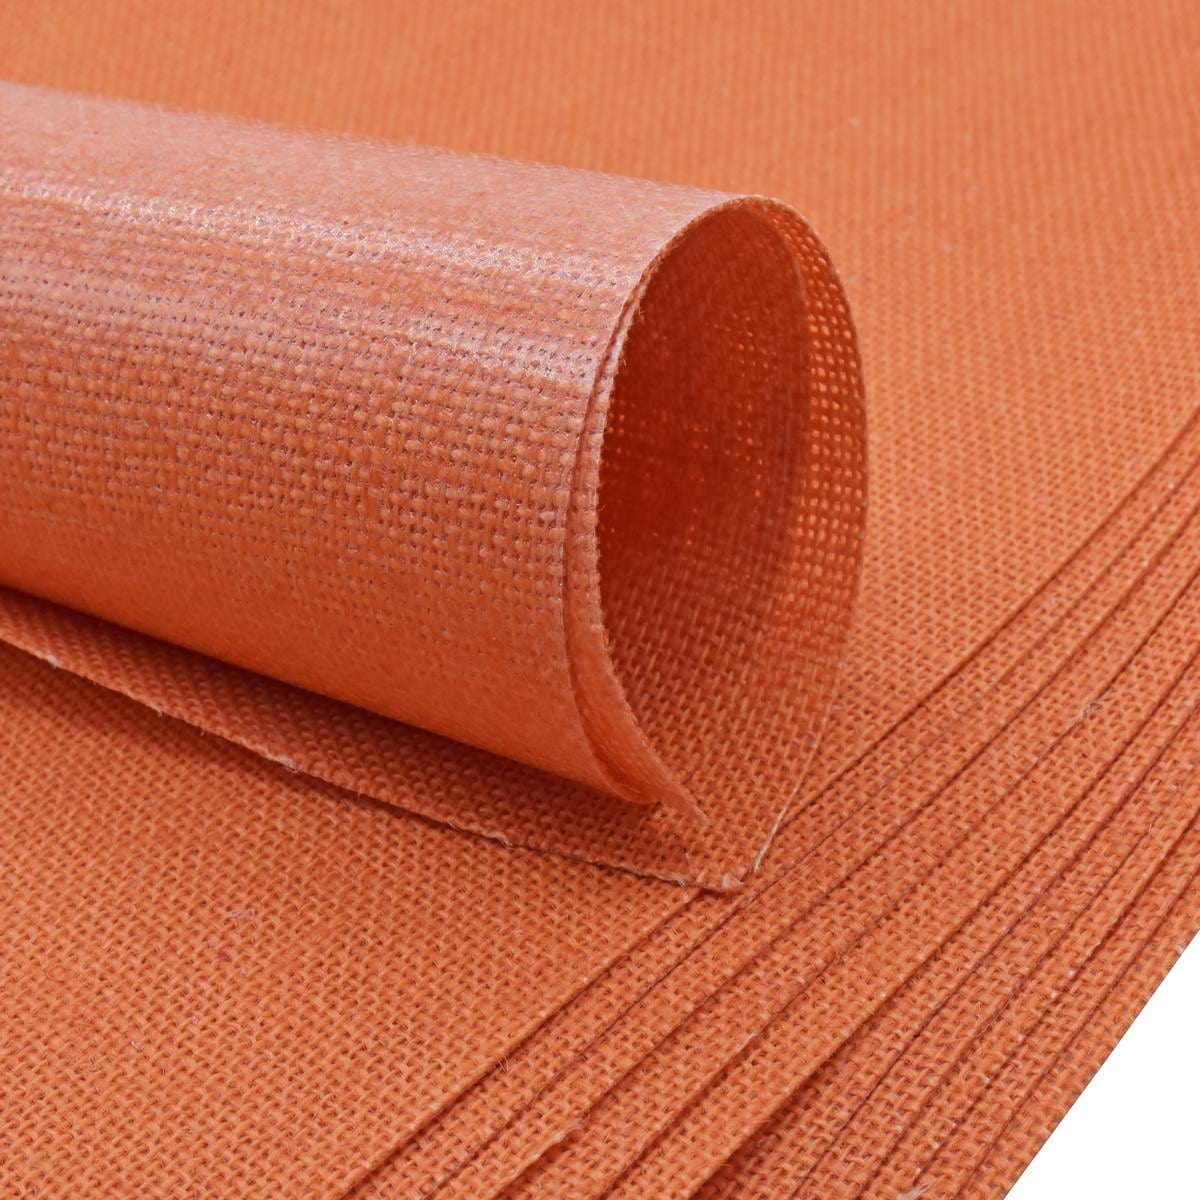 jags-mumbai Jute Ropes & Sheets Natural Elegance: A3 Jute Sheet Single Colour 10 Sheet Set